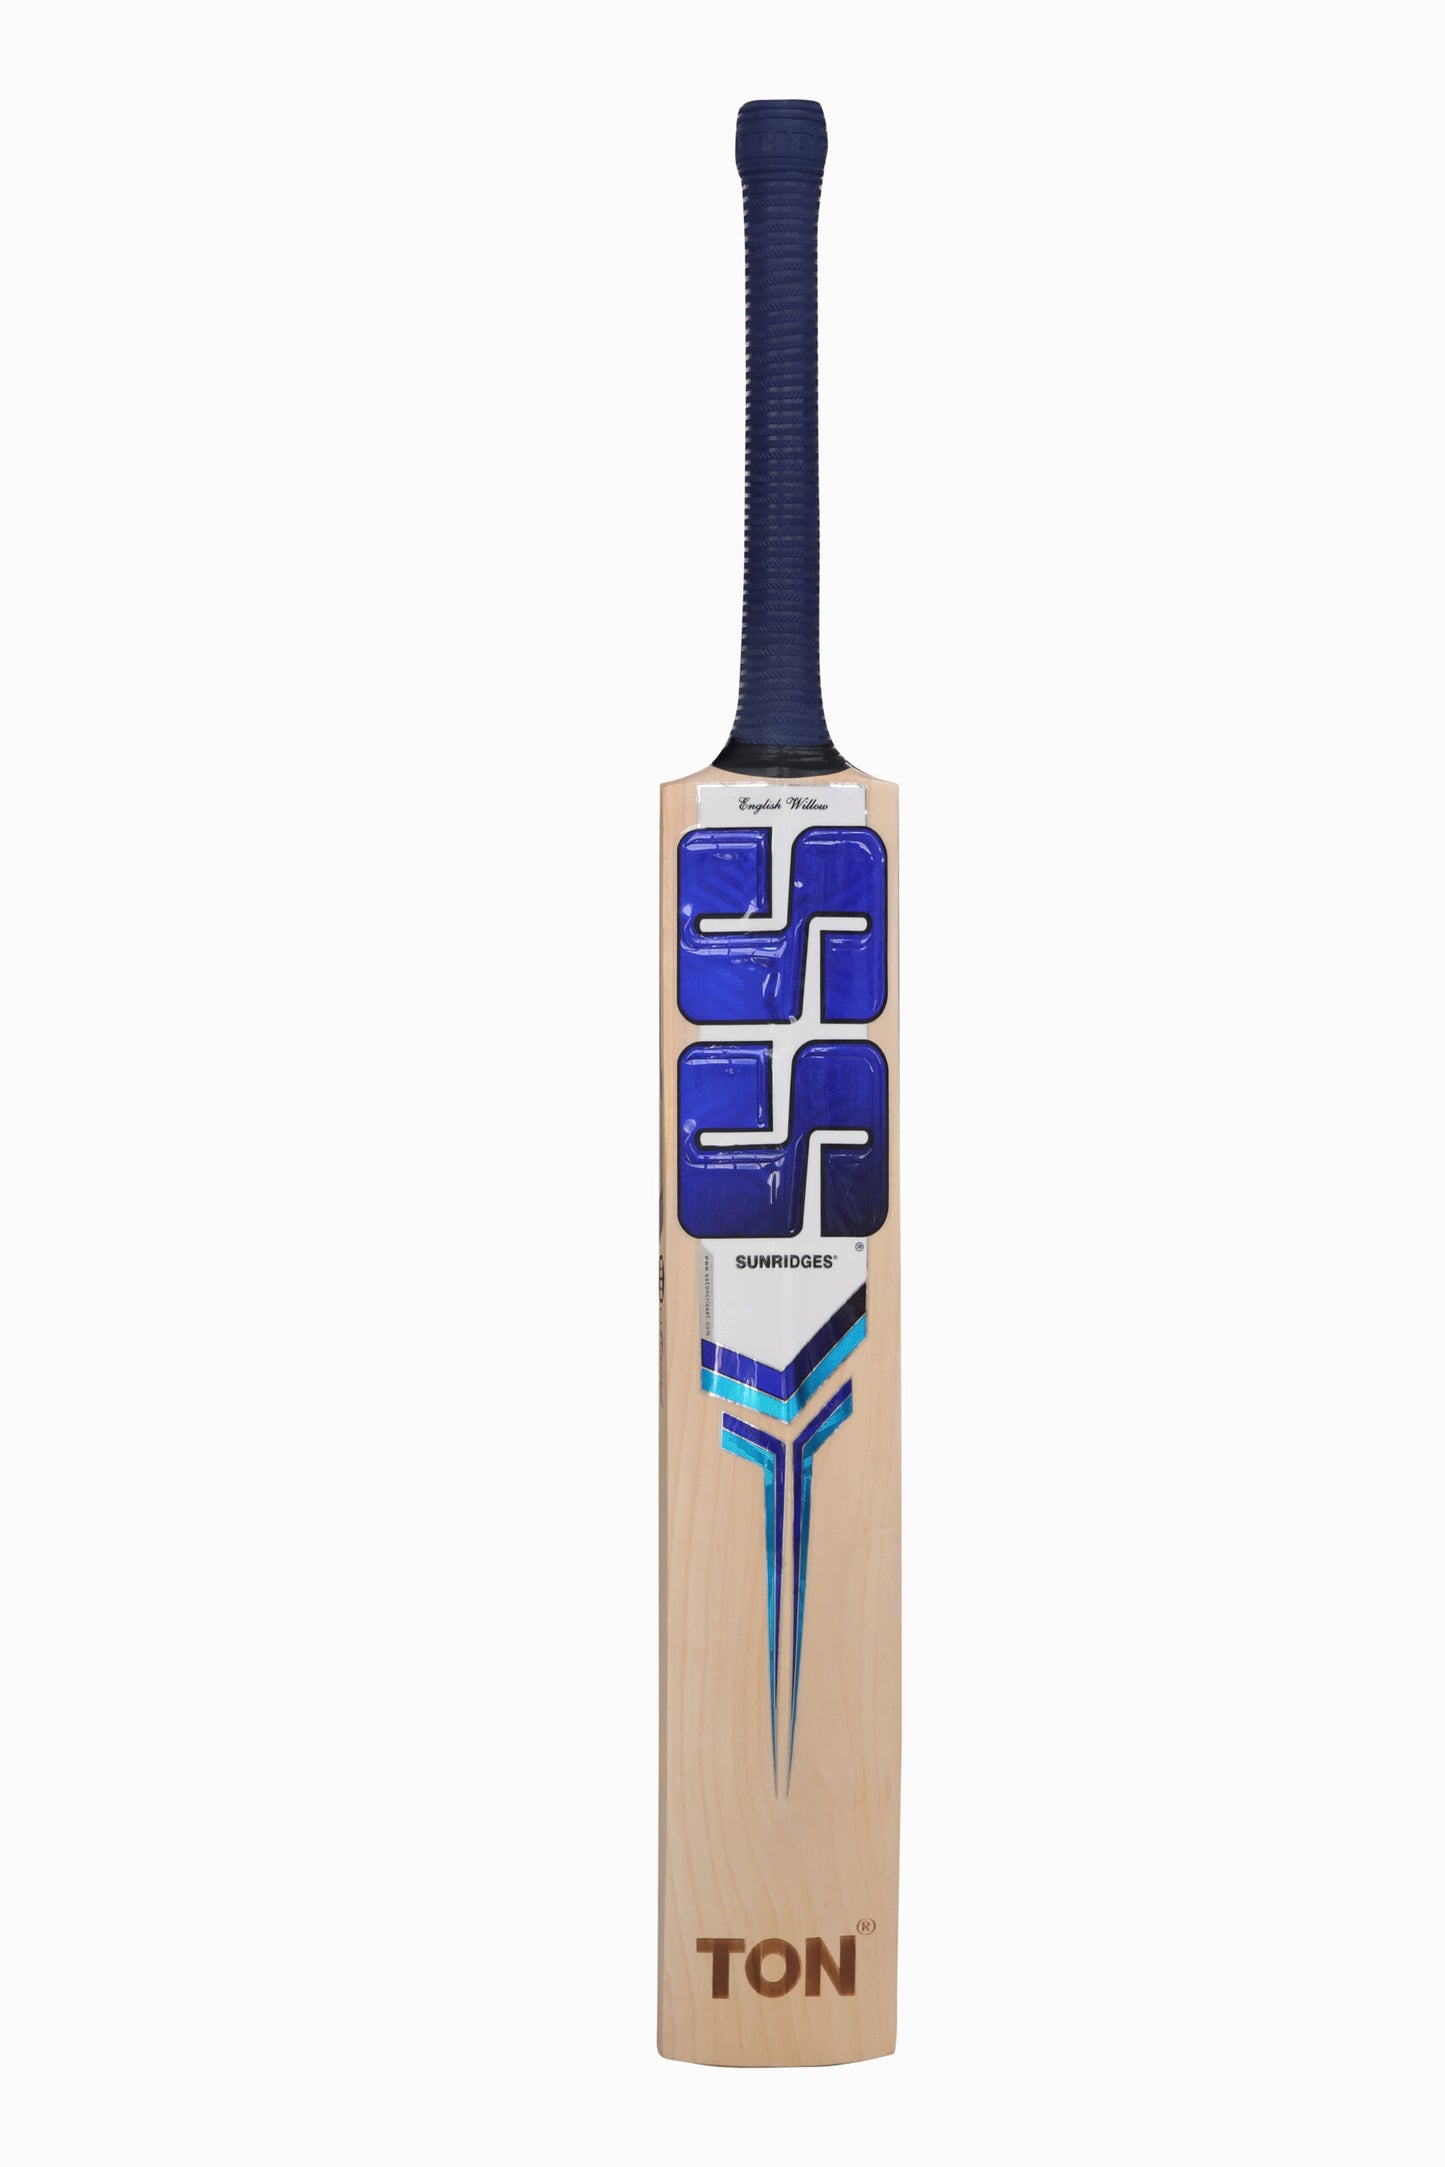 SS Sky Flicker English Willow Cricket Bat – Size-6